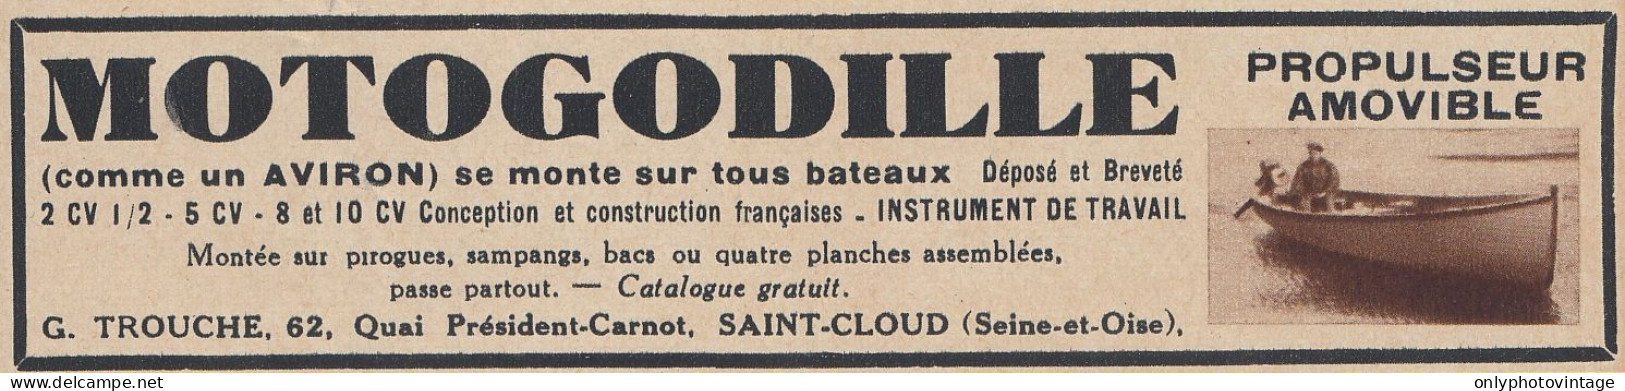 MOTOGODILLE Propulseur Amovible - 1936 Vintage Advertising - Pubblicit�  - Werbung